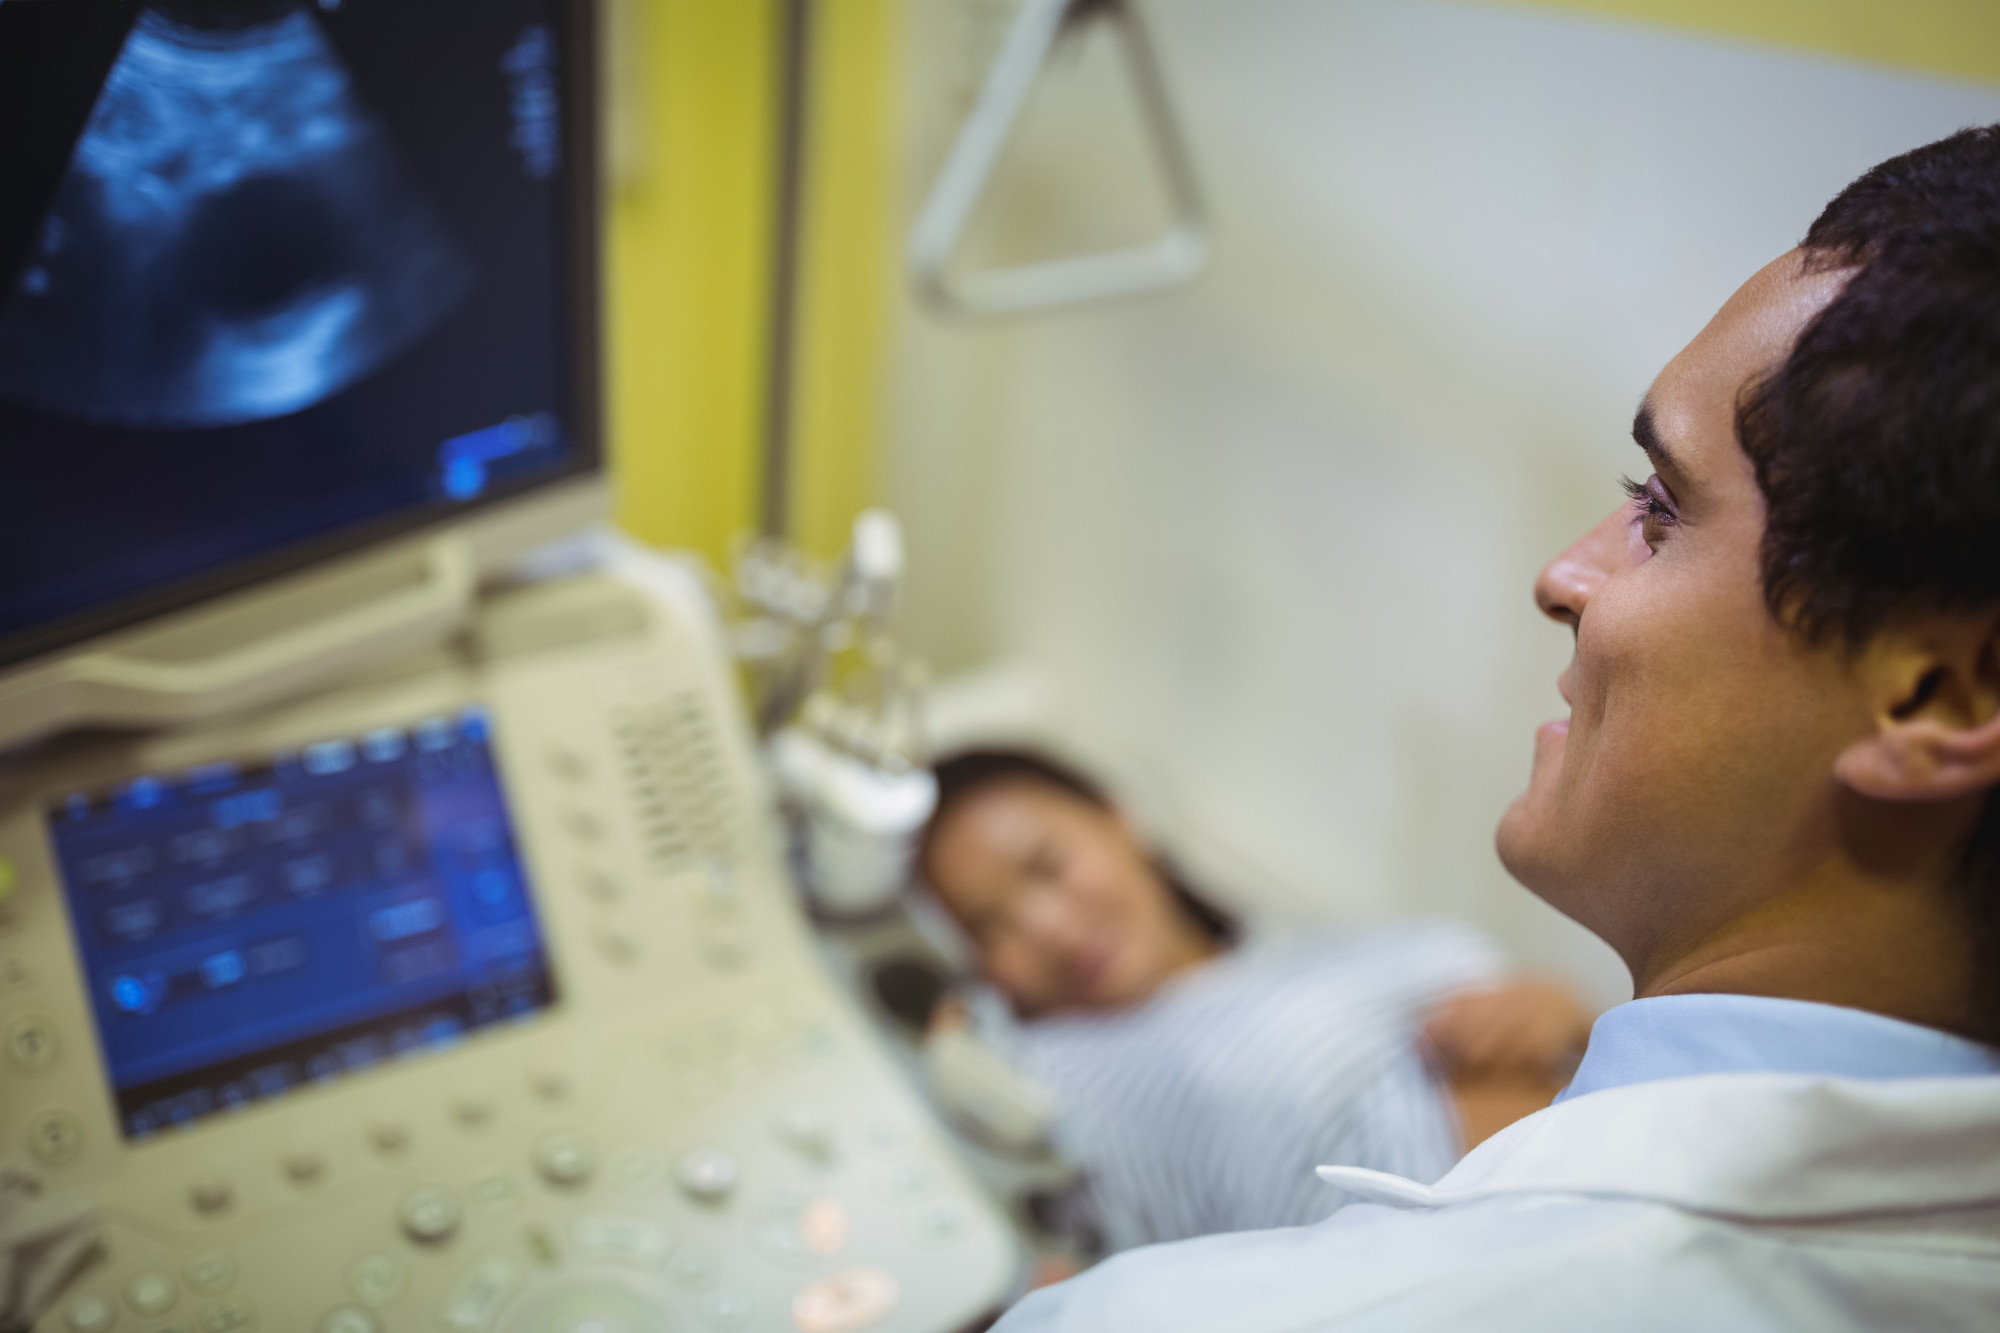 appareil-de-balayage-à-ultrasons-regardant-le-docteur